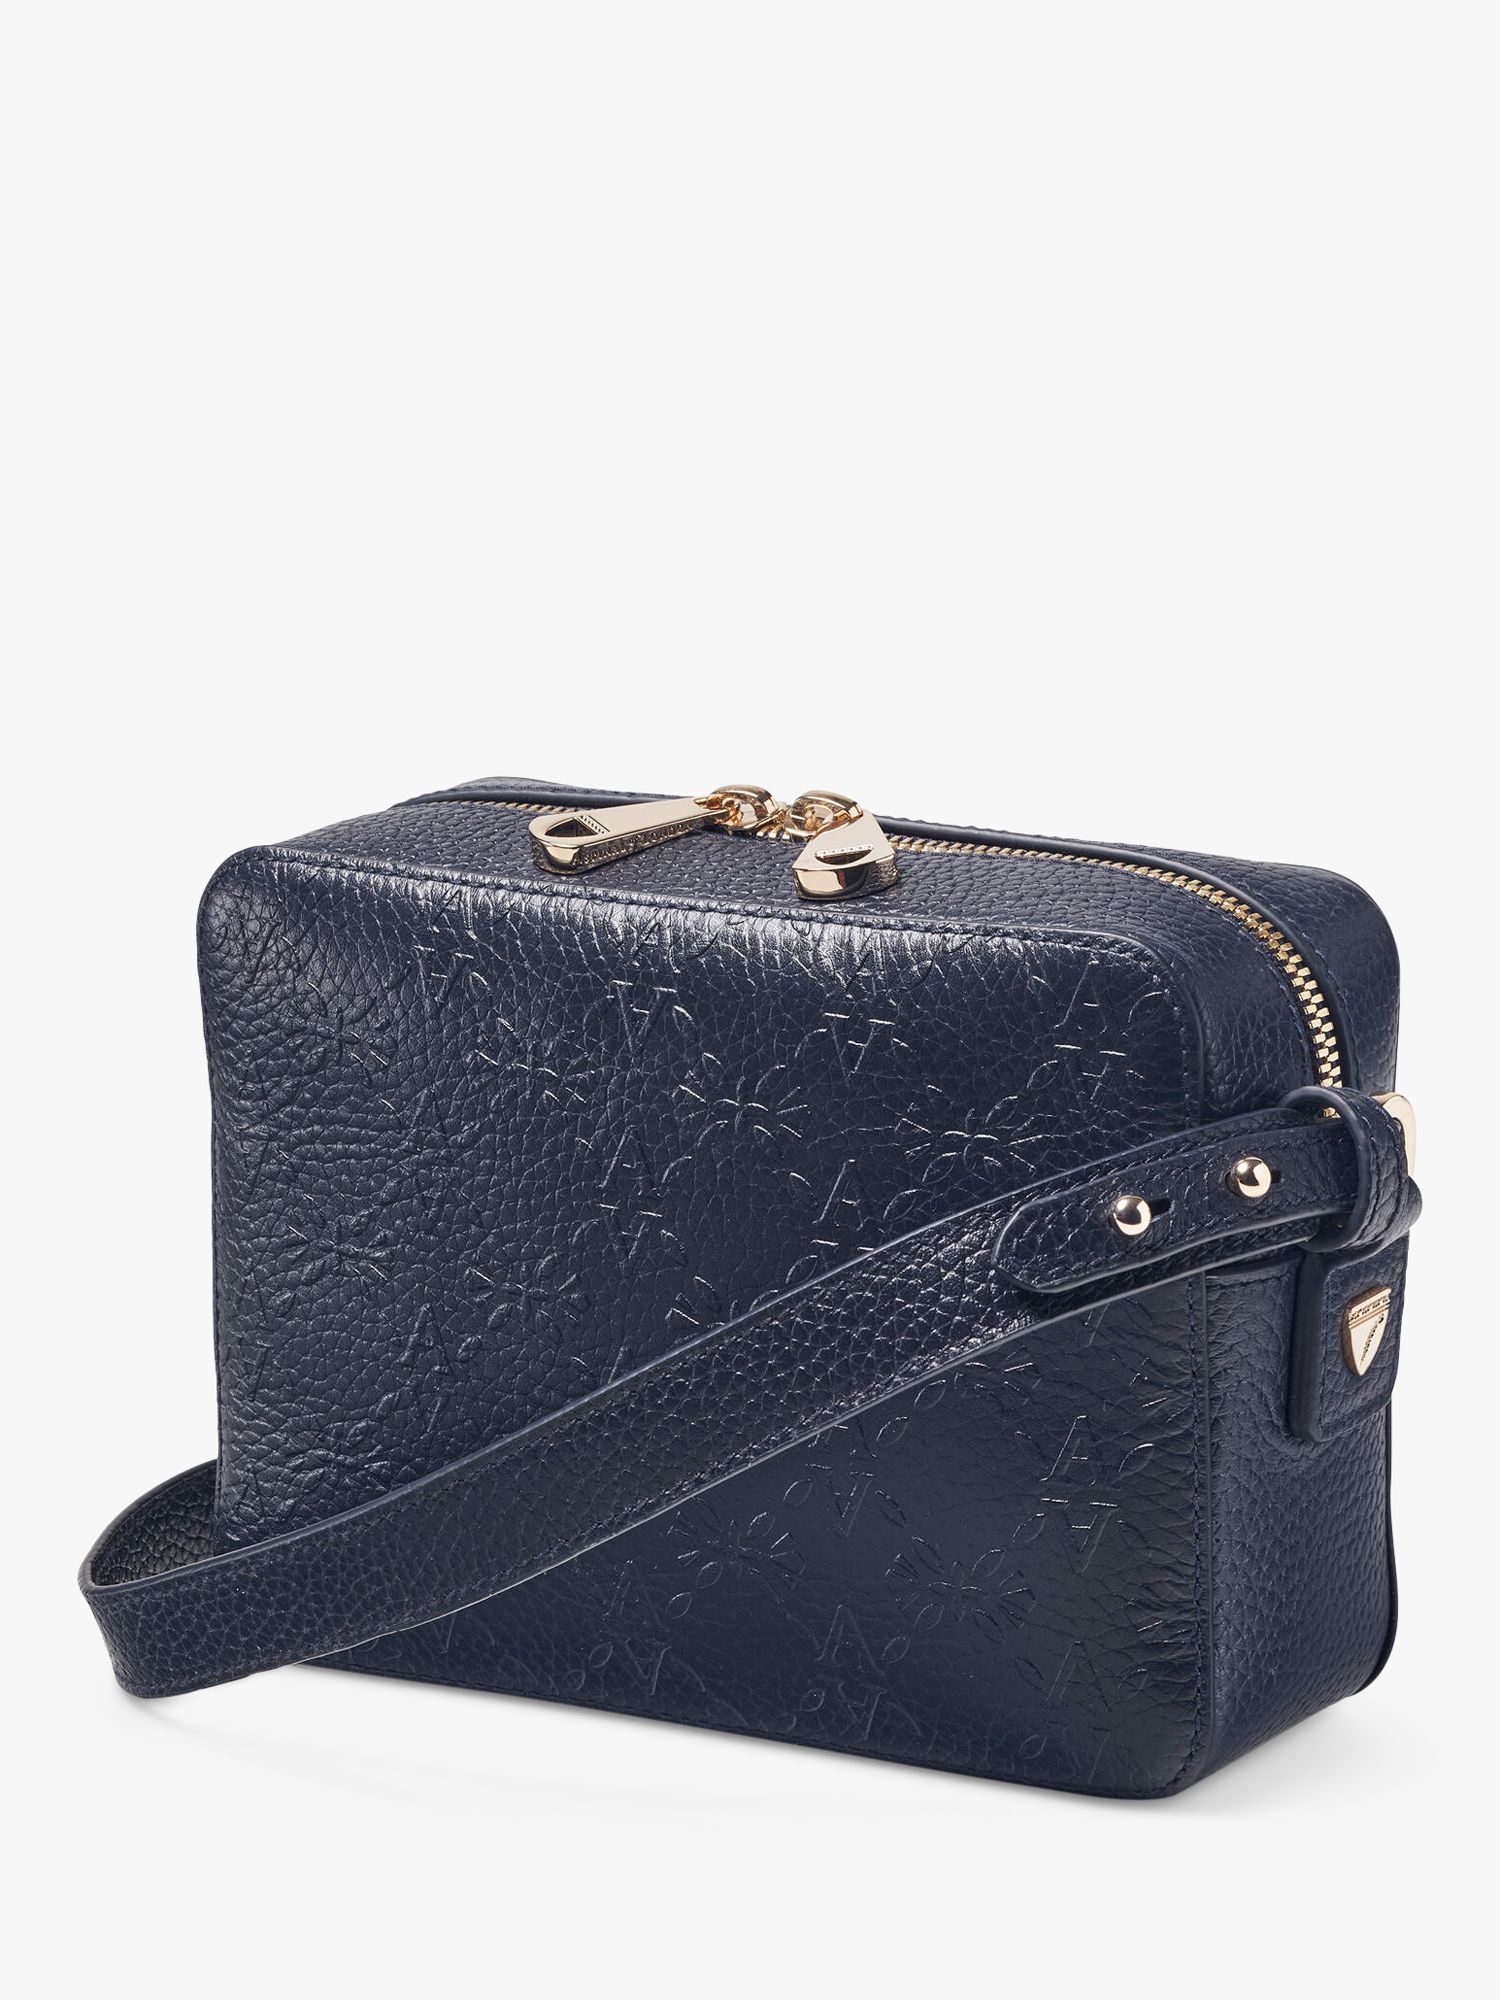 LV Louis Vuitton WOMEN'S MONOGRAM LEATHER CAMERA BOX HANDBAG SHOULDER BAG